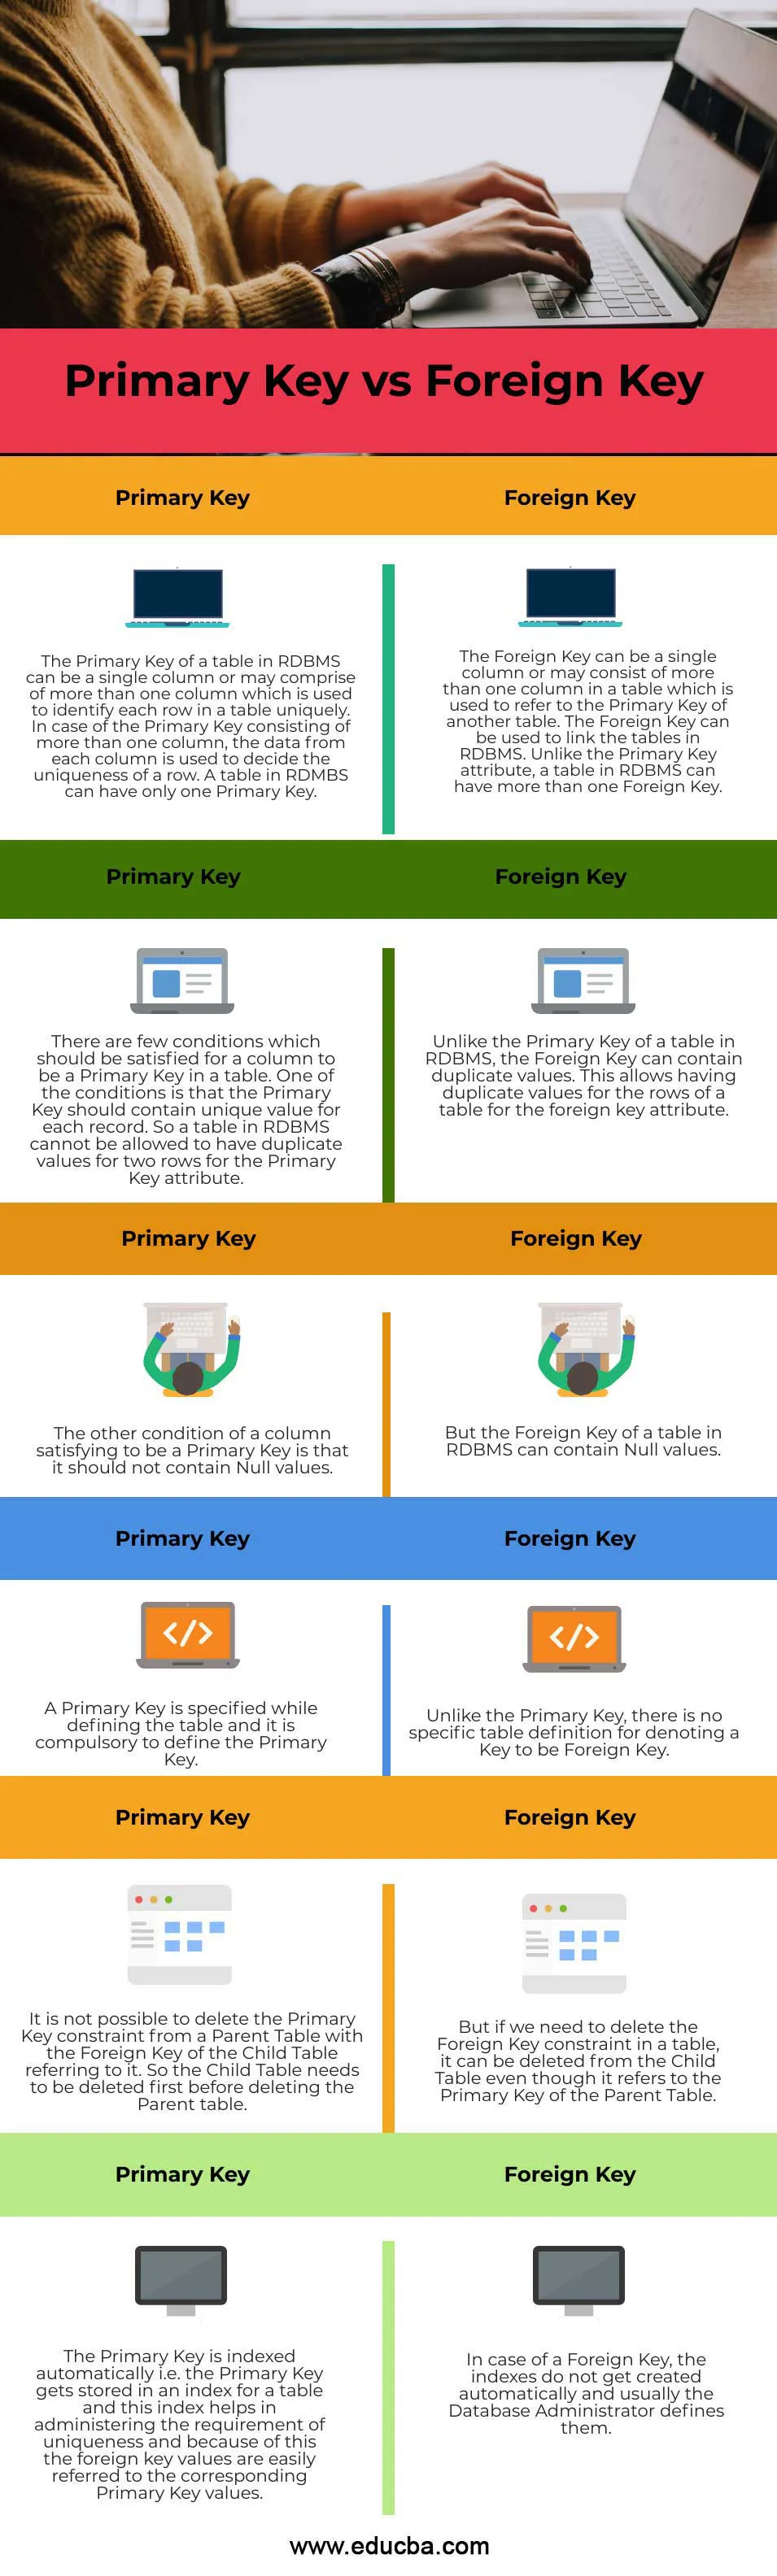 Primary-Key-vs-Foreign-Key-info